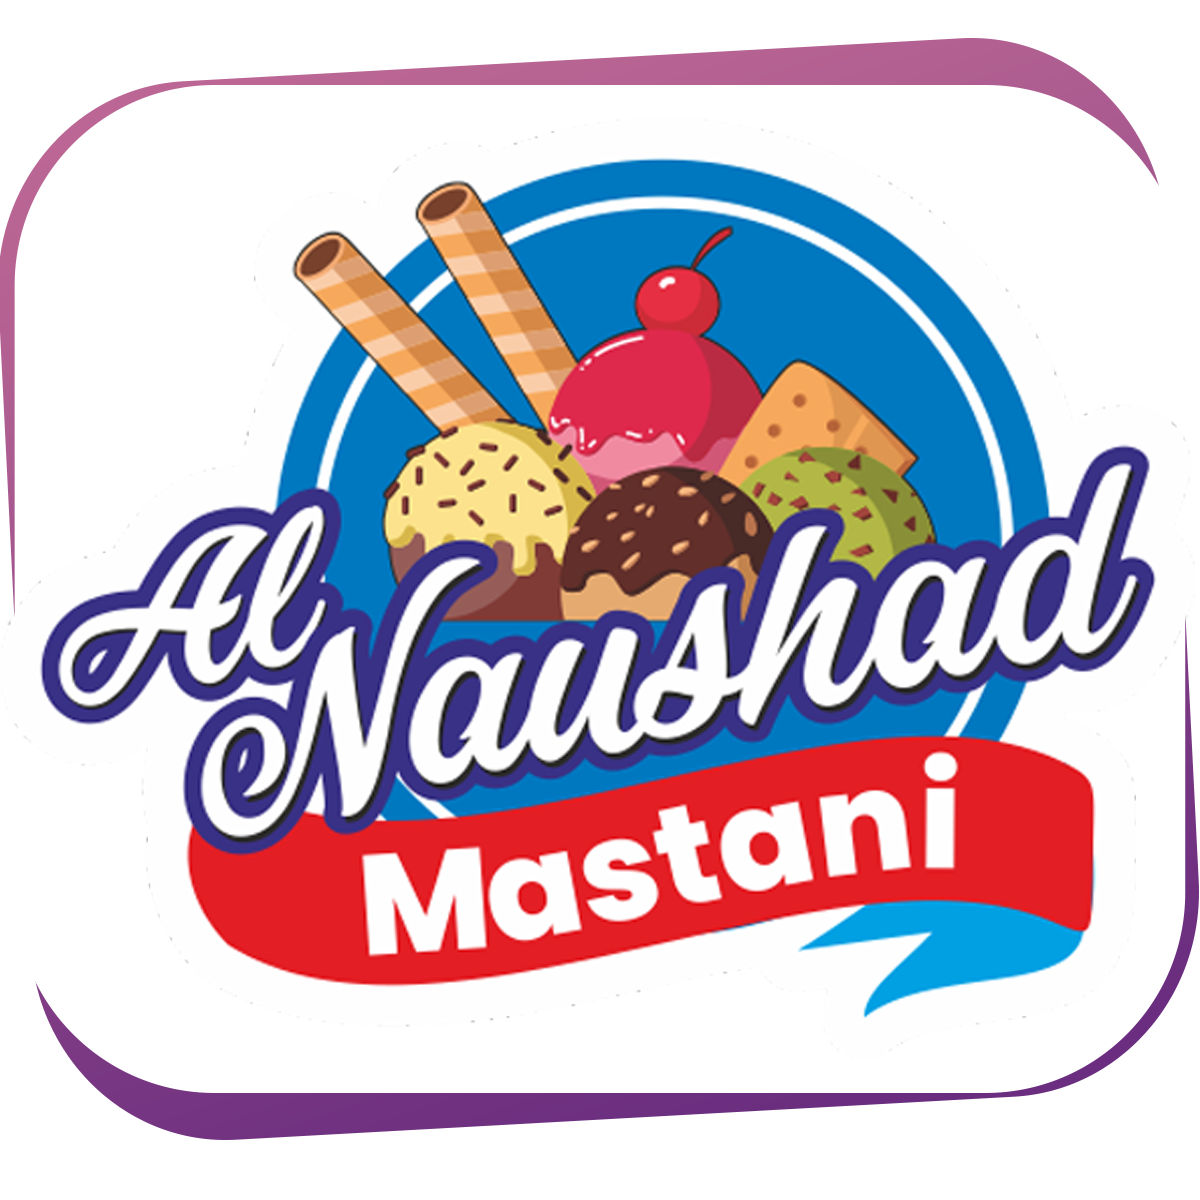 Naushad Mastani